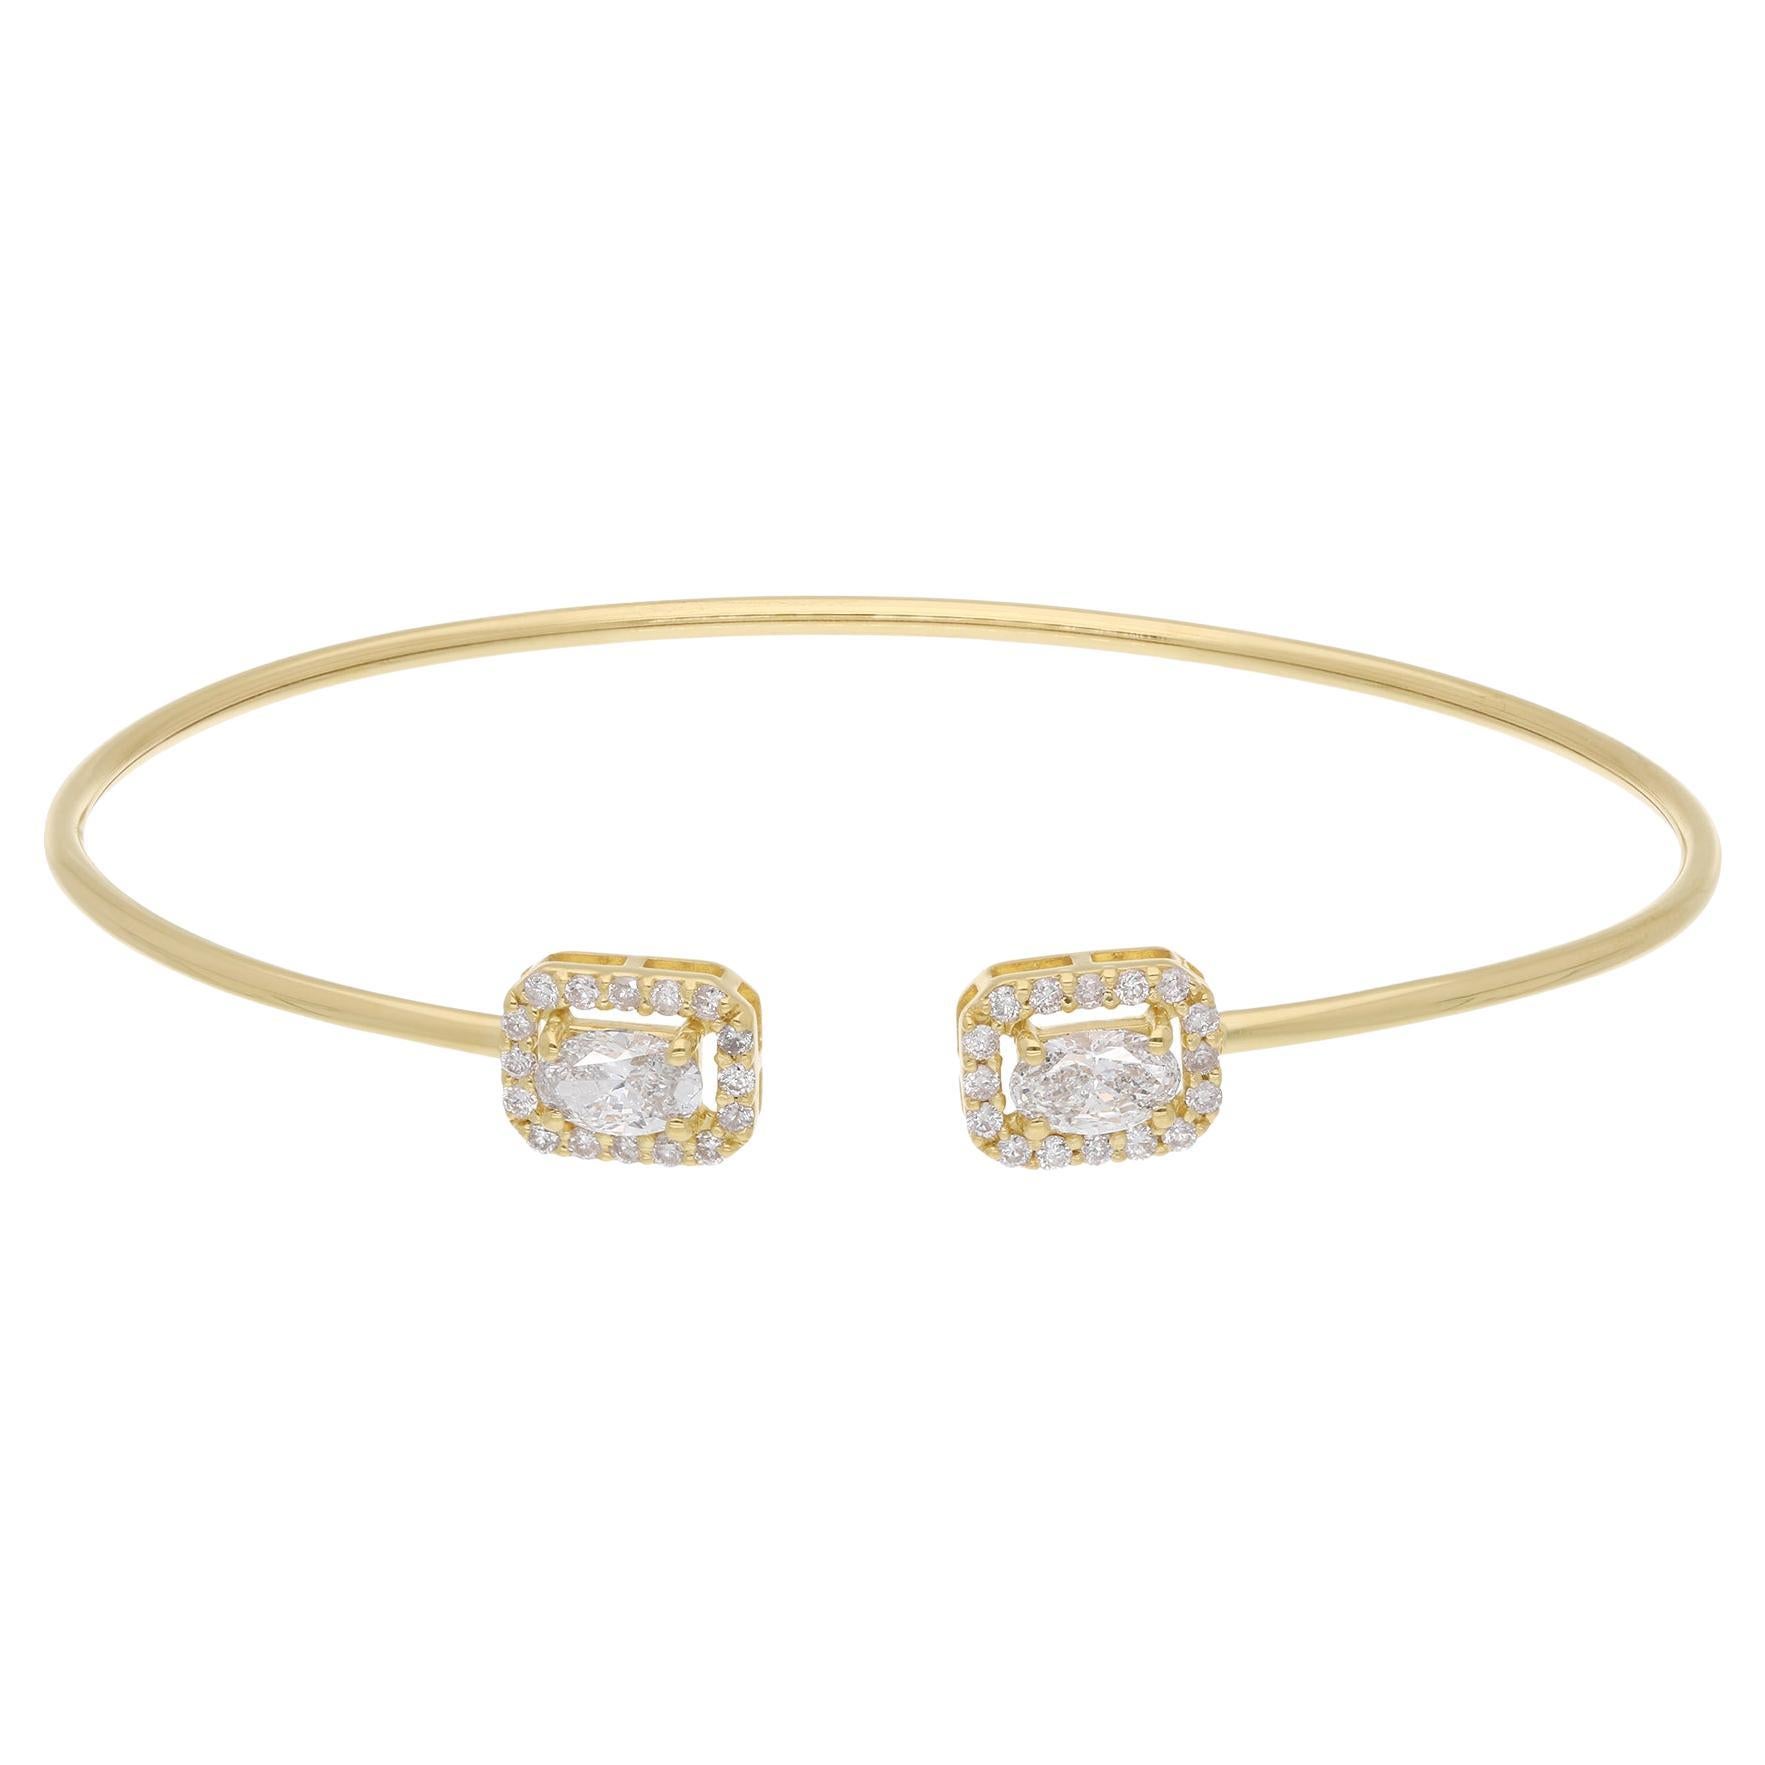 Oval & Round Diamond Cuff Bangle Bracelet 14 Karat Yellow Gold Handmade Jewelry